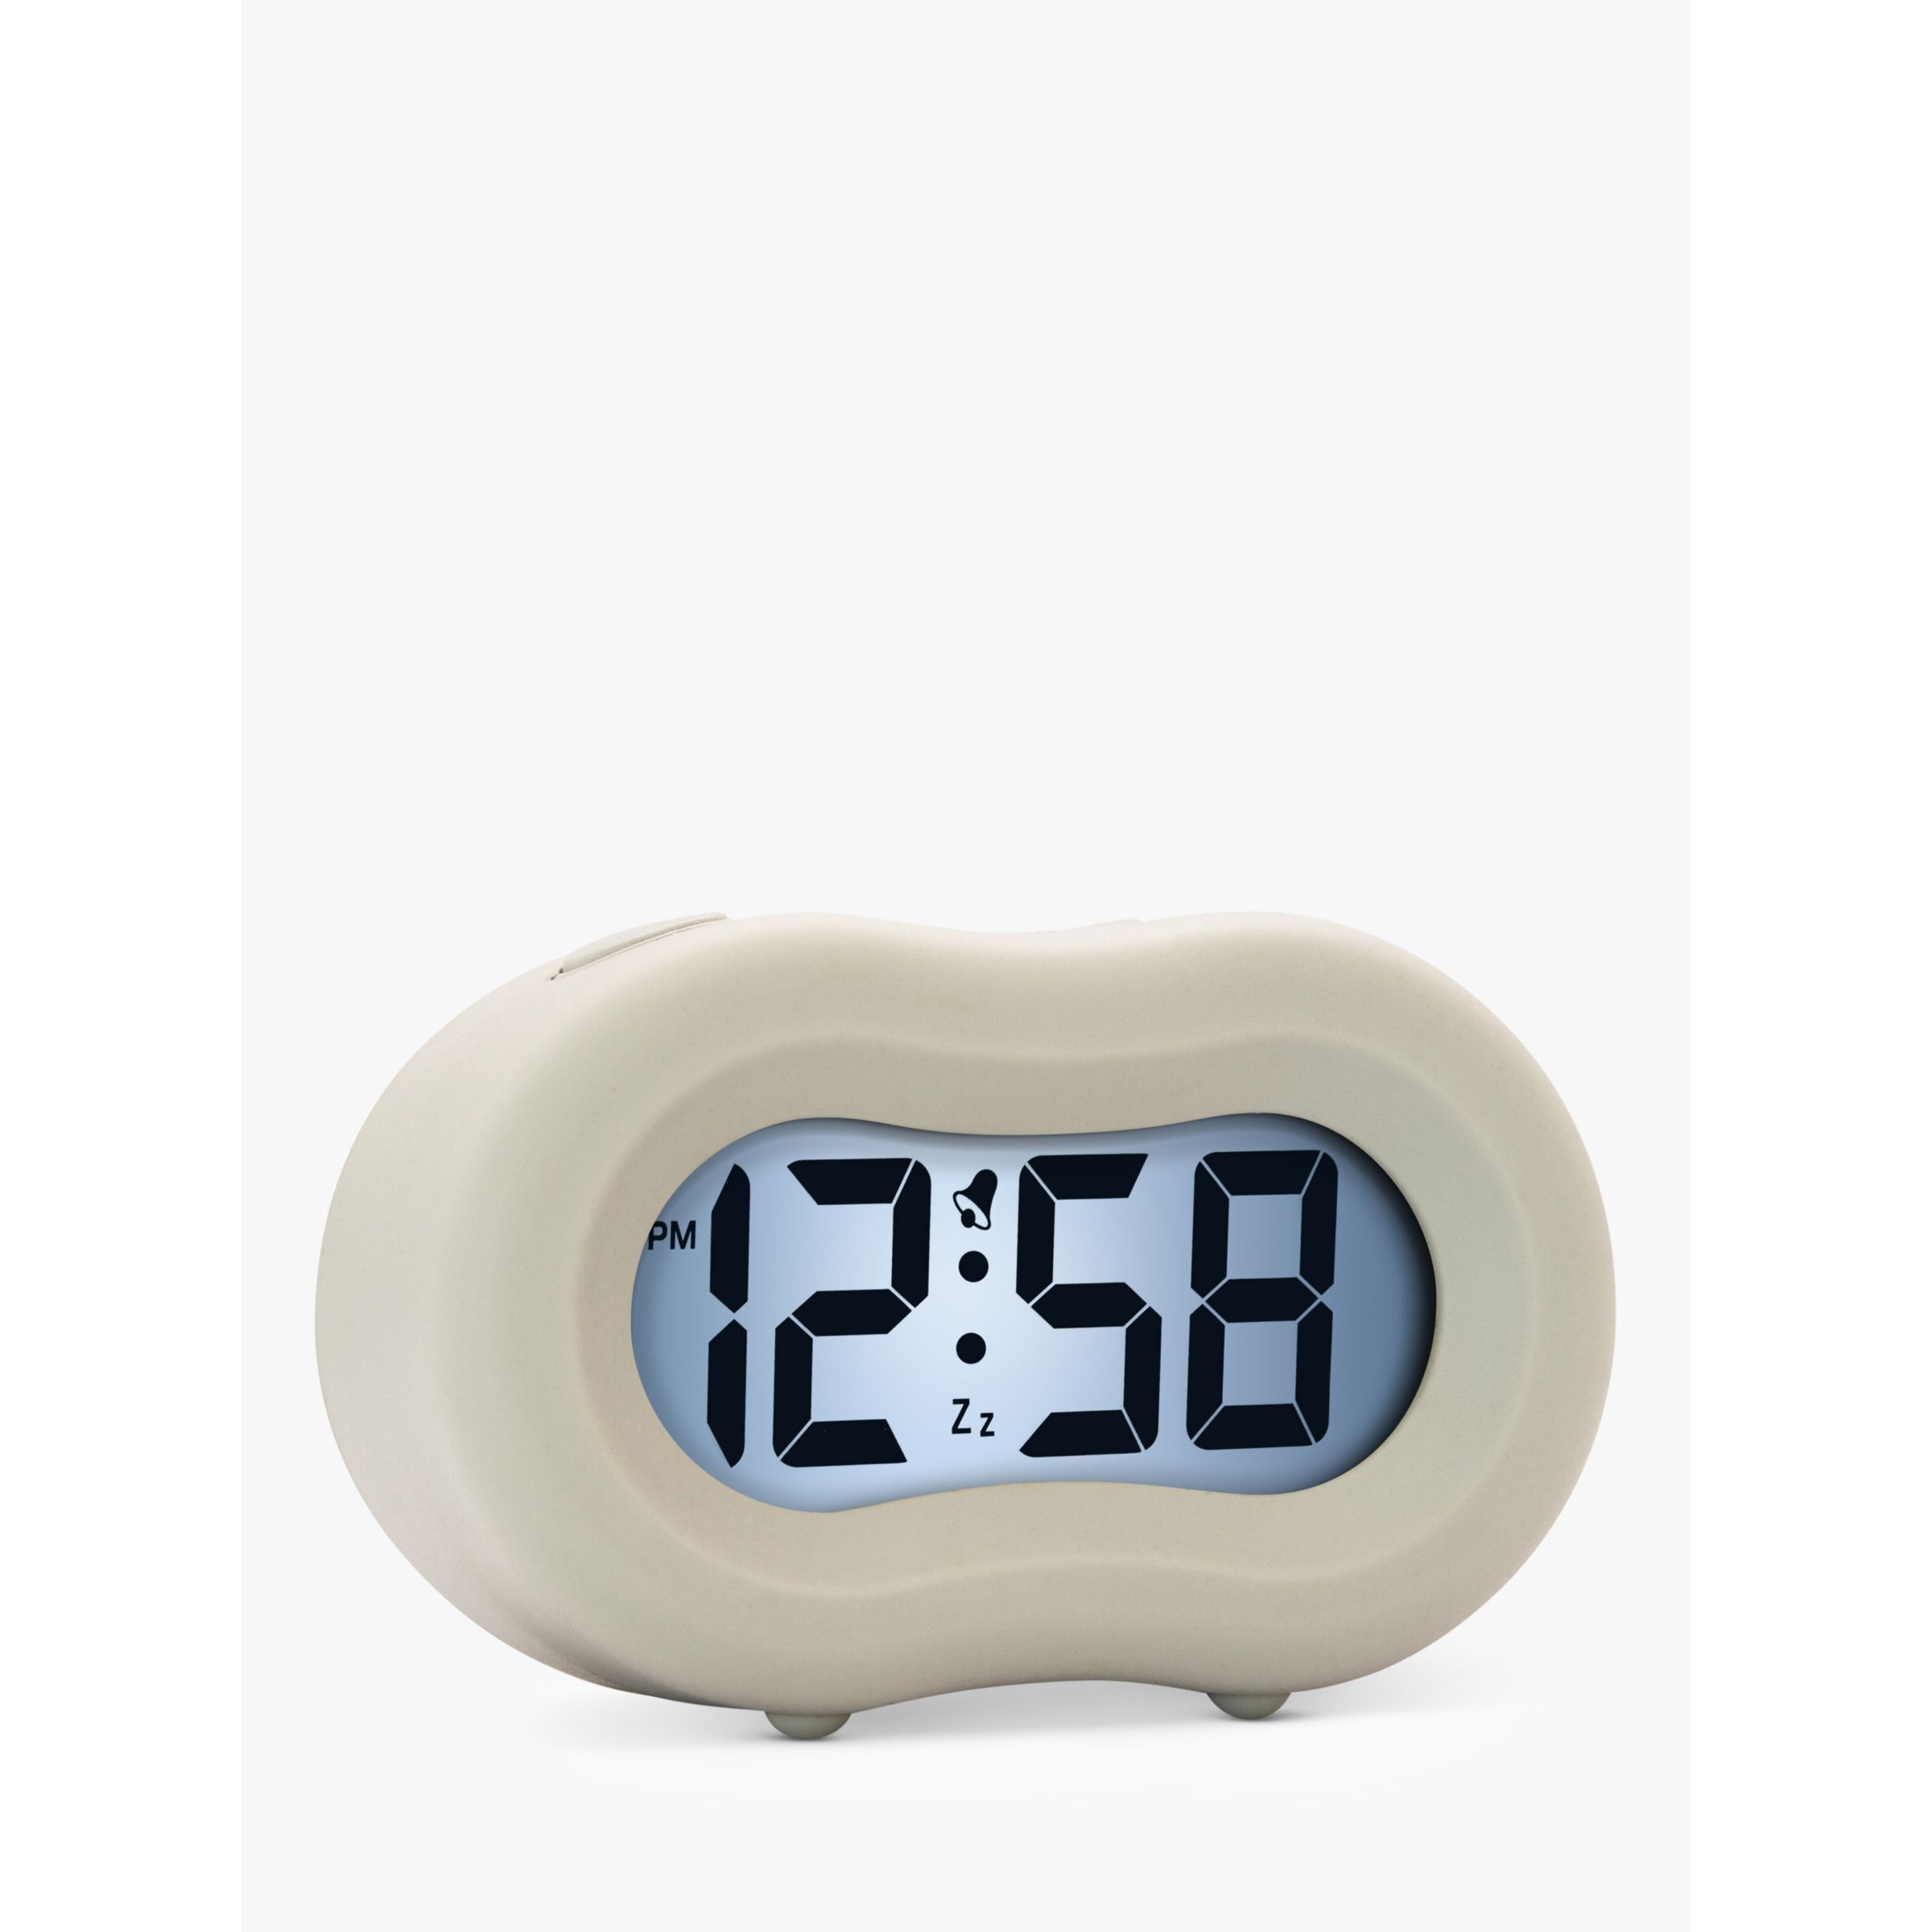 Acctim Nash Smartlite Soft-Touch Case Digital LCD Alarm Clock - image 1